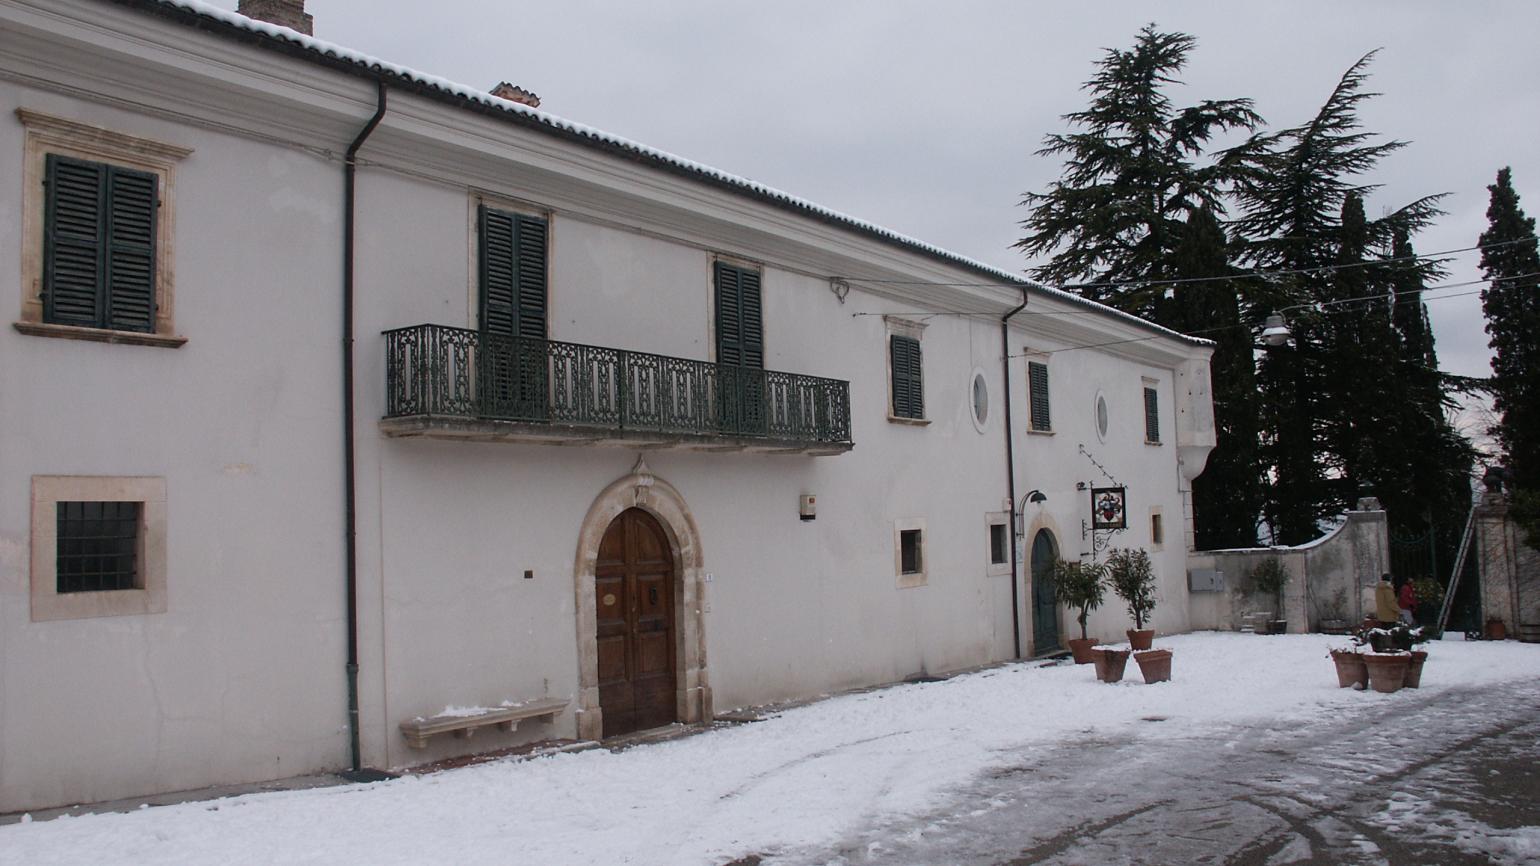 Prata d’Ansidonia (Aq), San Nicandro, Il Palazzo Cappa, ingresso